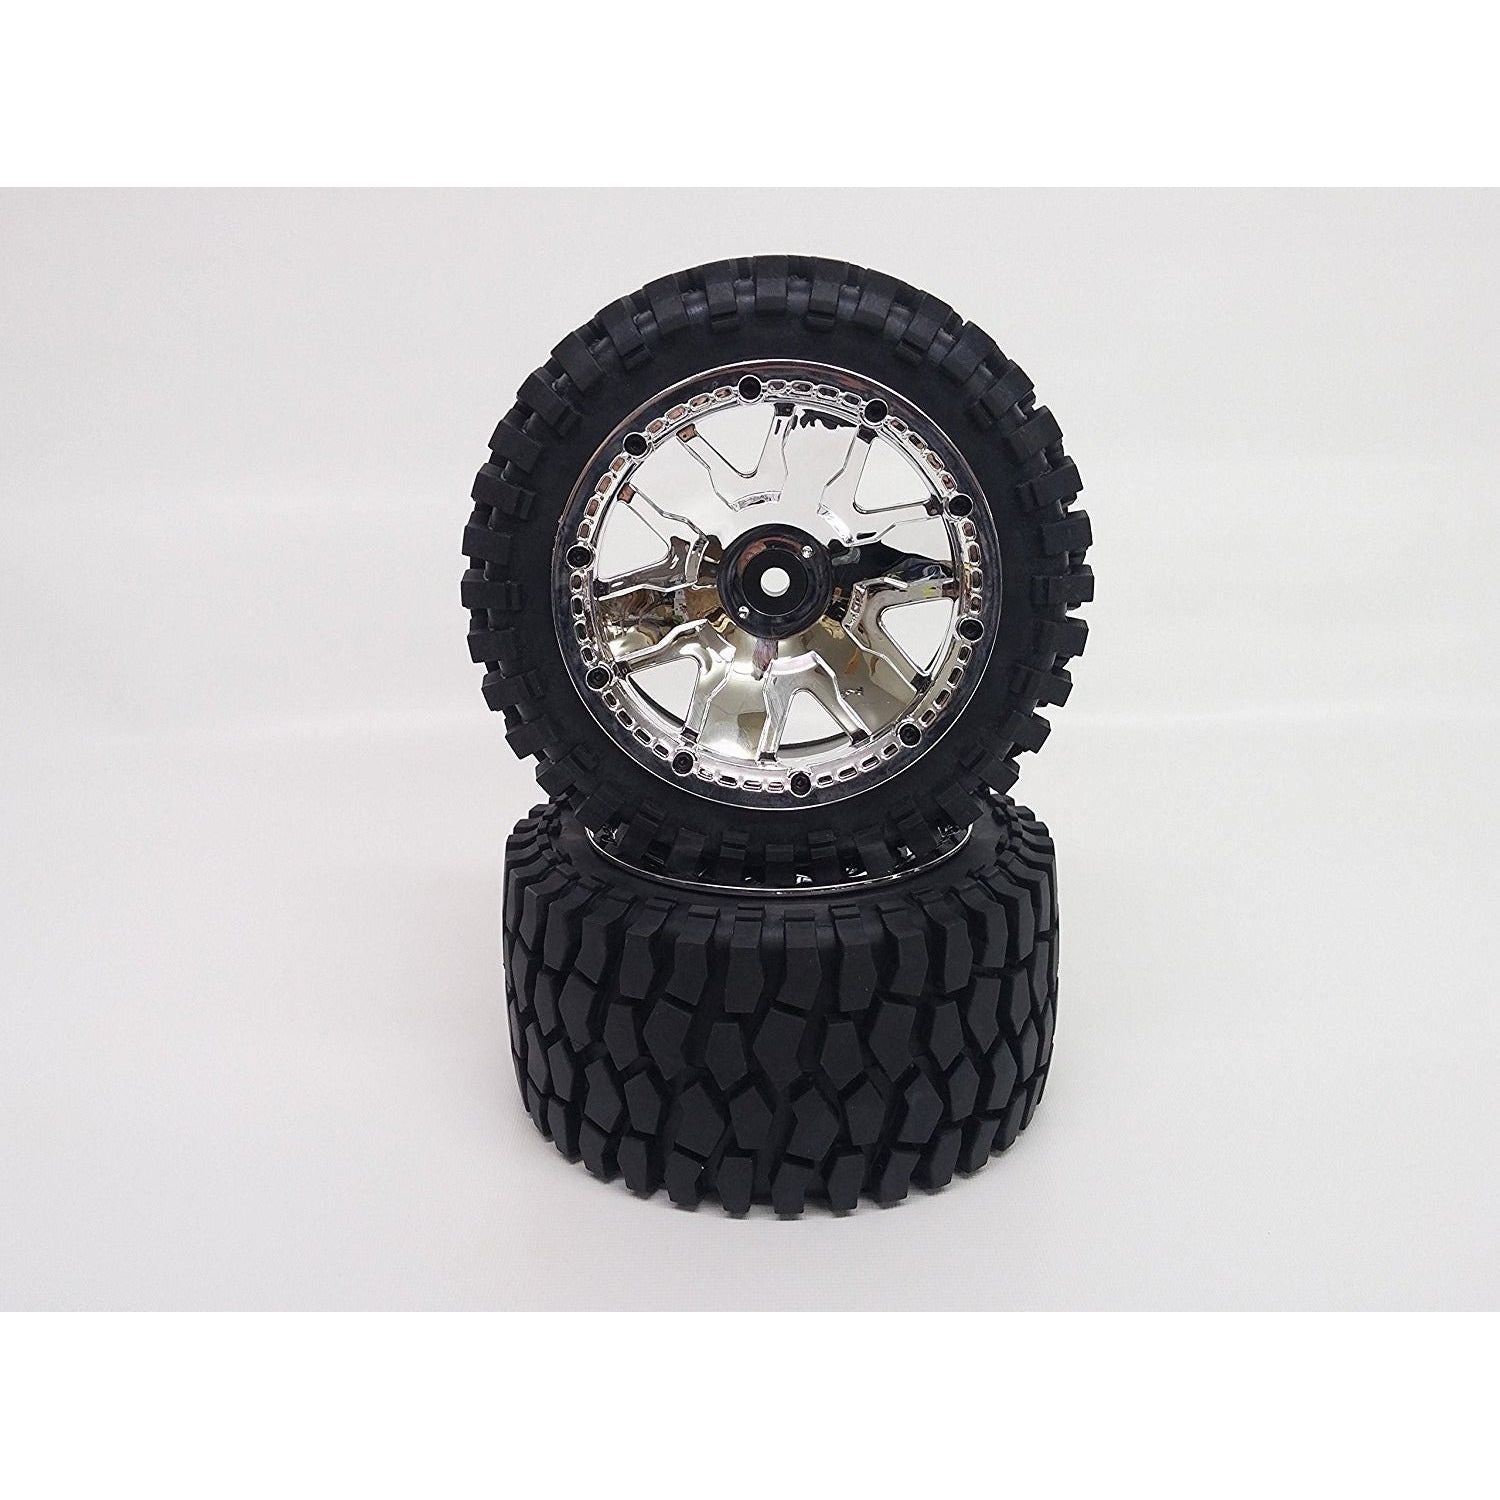 K-Rock Tires & Yuma Rims with Beadlocks - Rear (1 Pair) (Choose Color)